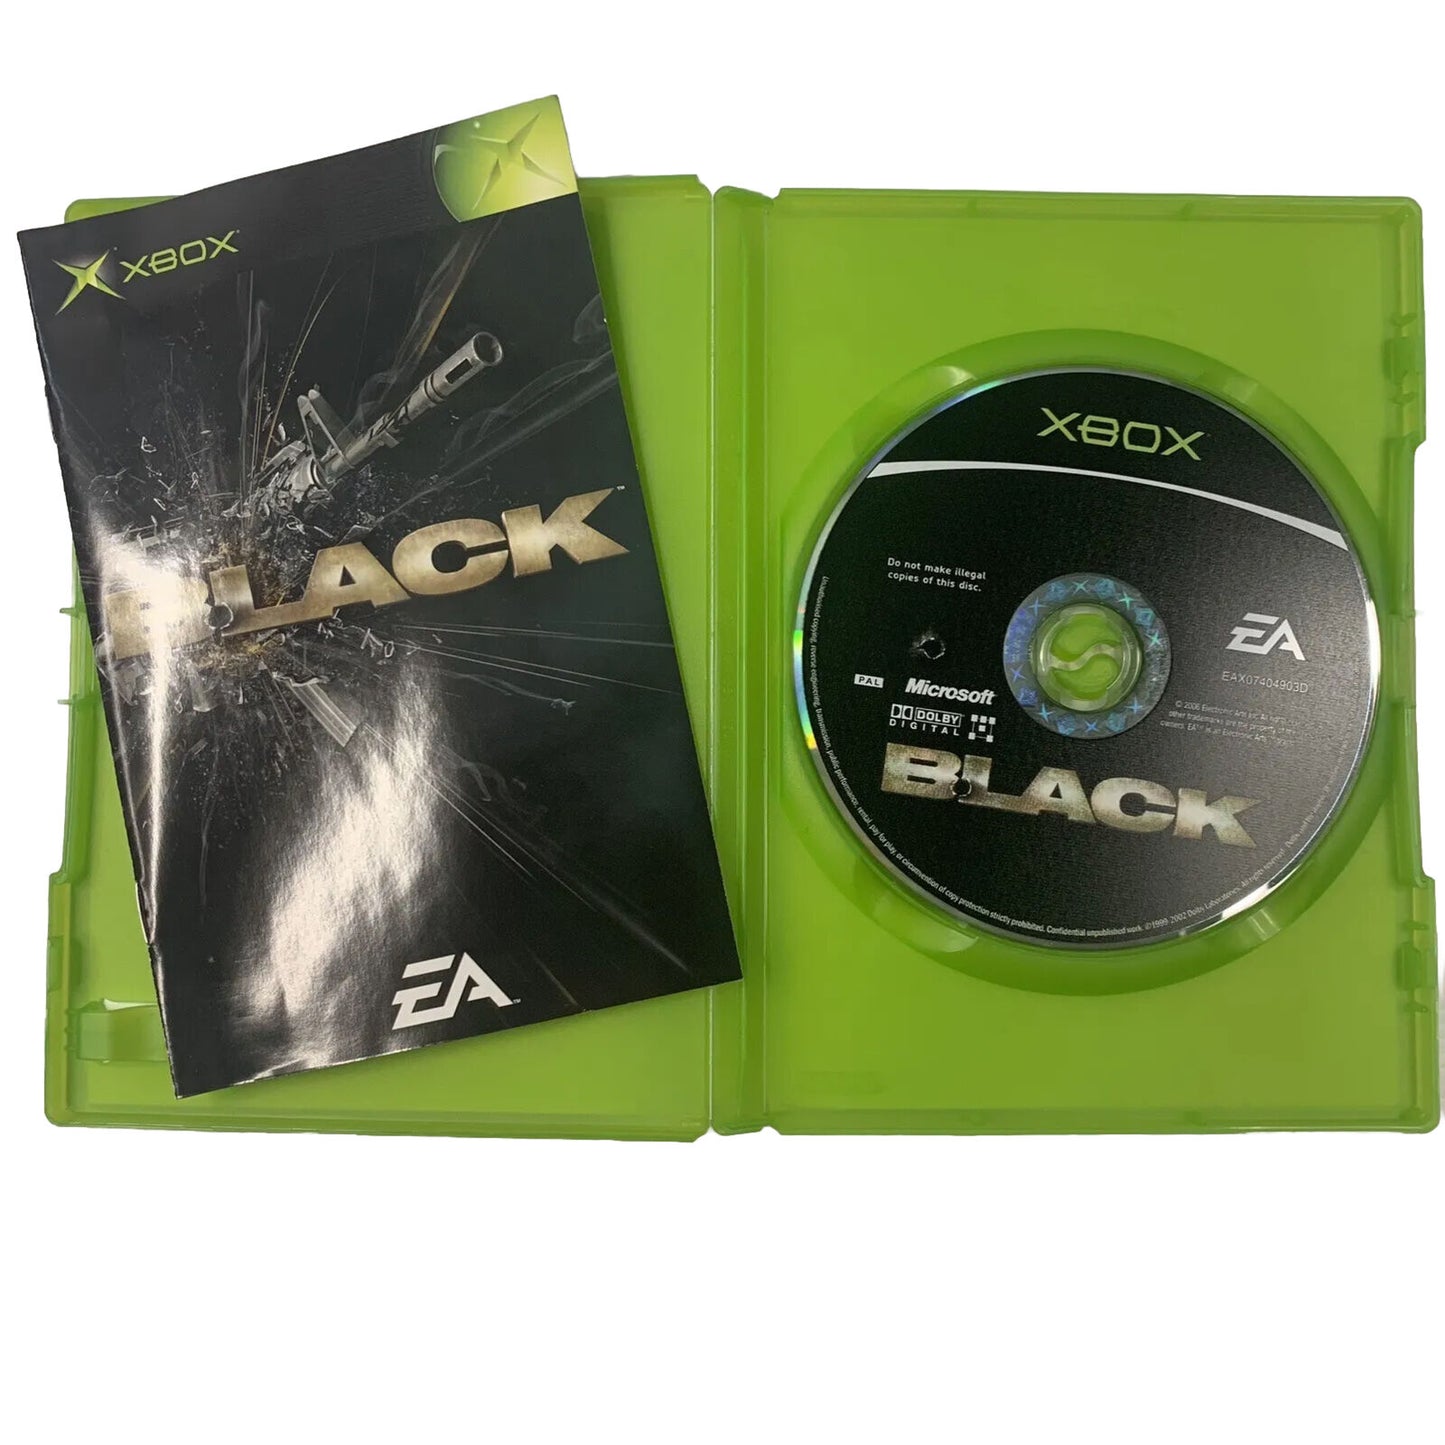 BLACK Xbox Original